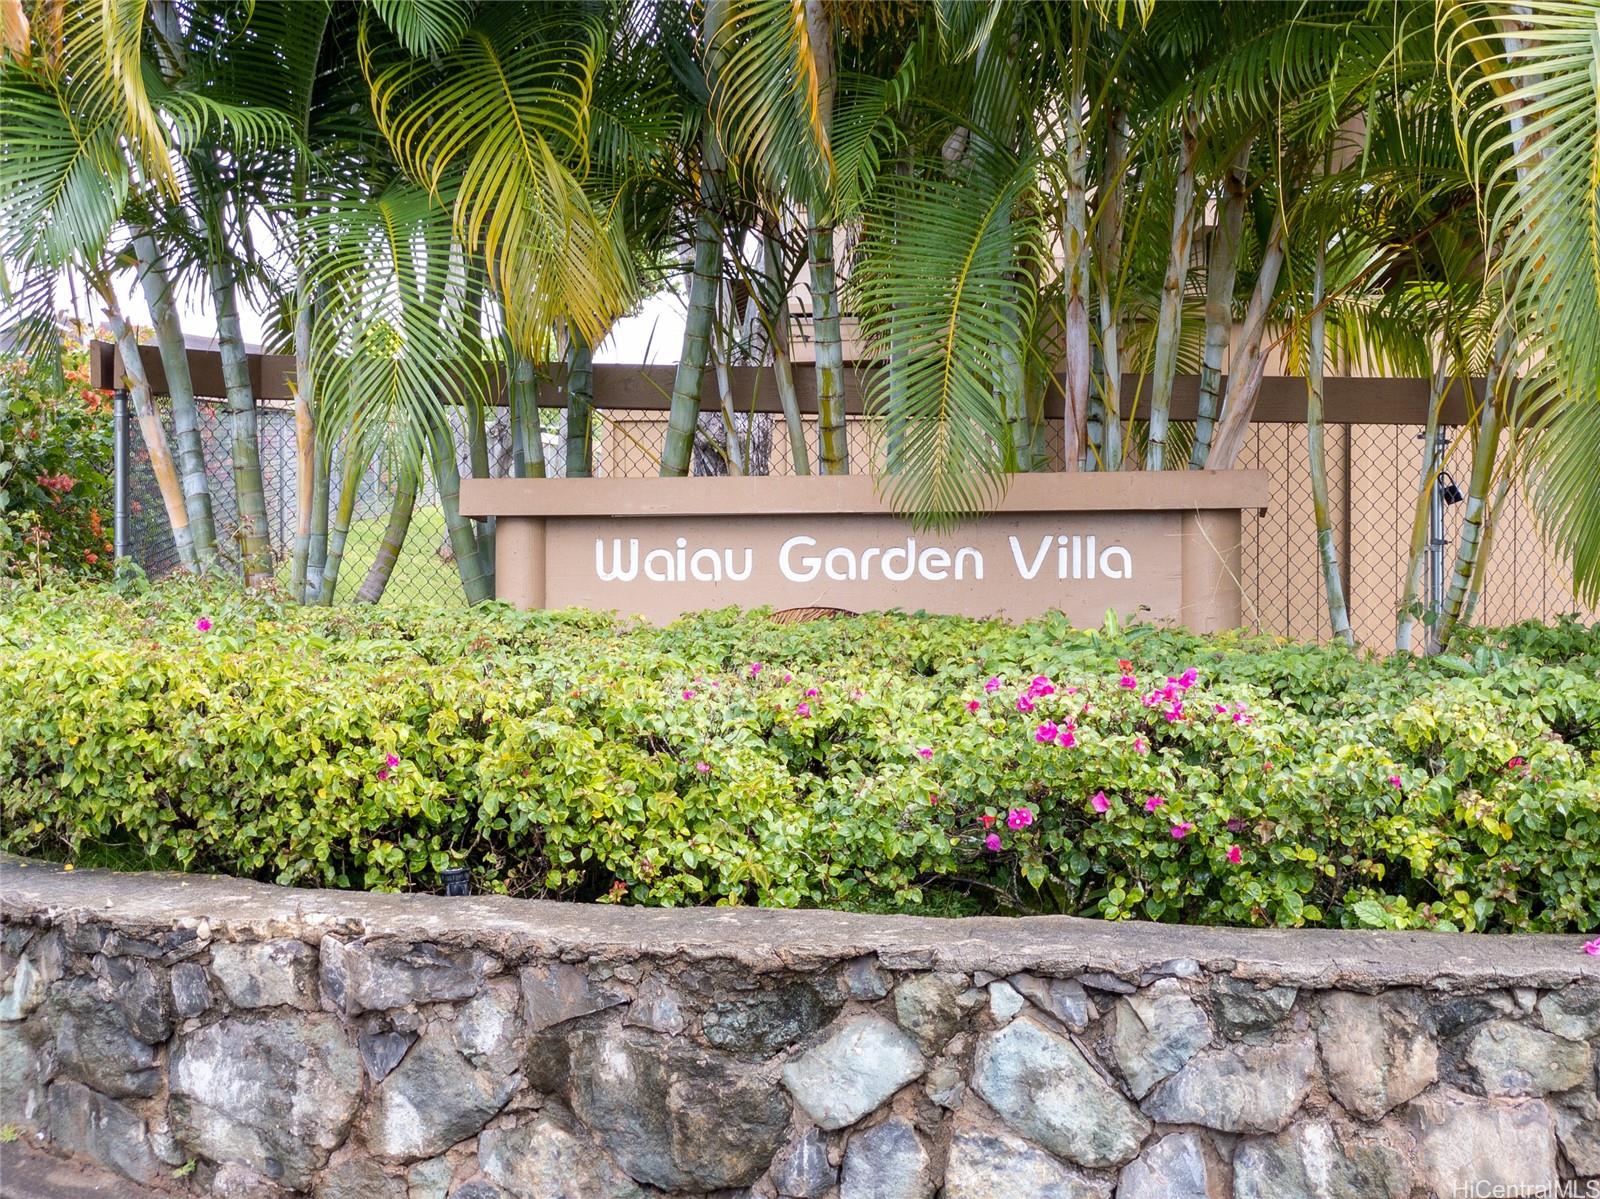 Waiau Garden Villa 98-1366 Koaheahe Place  Unit 193